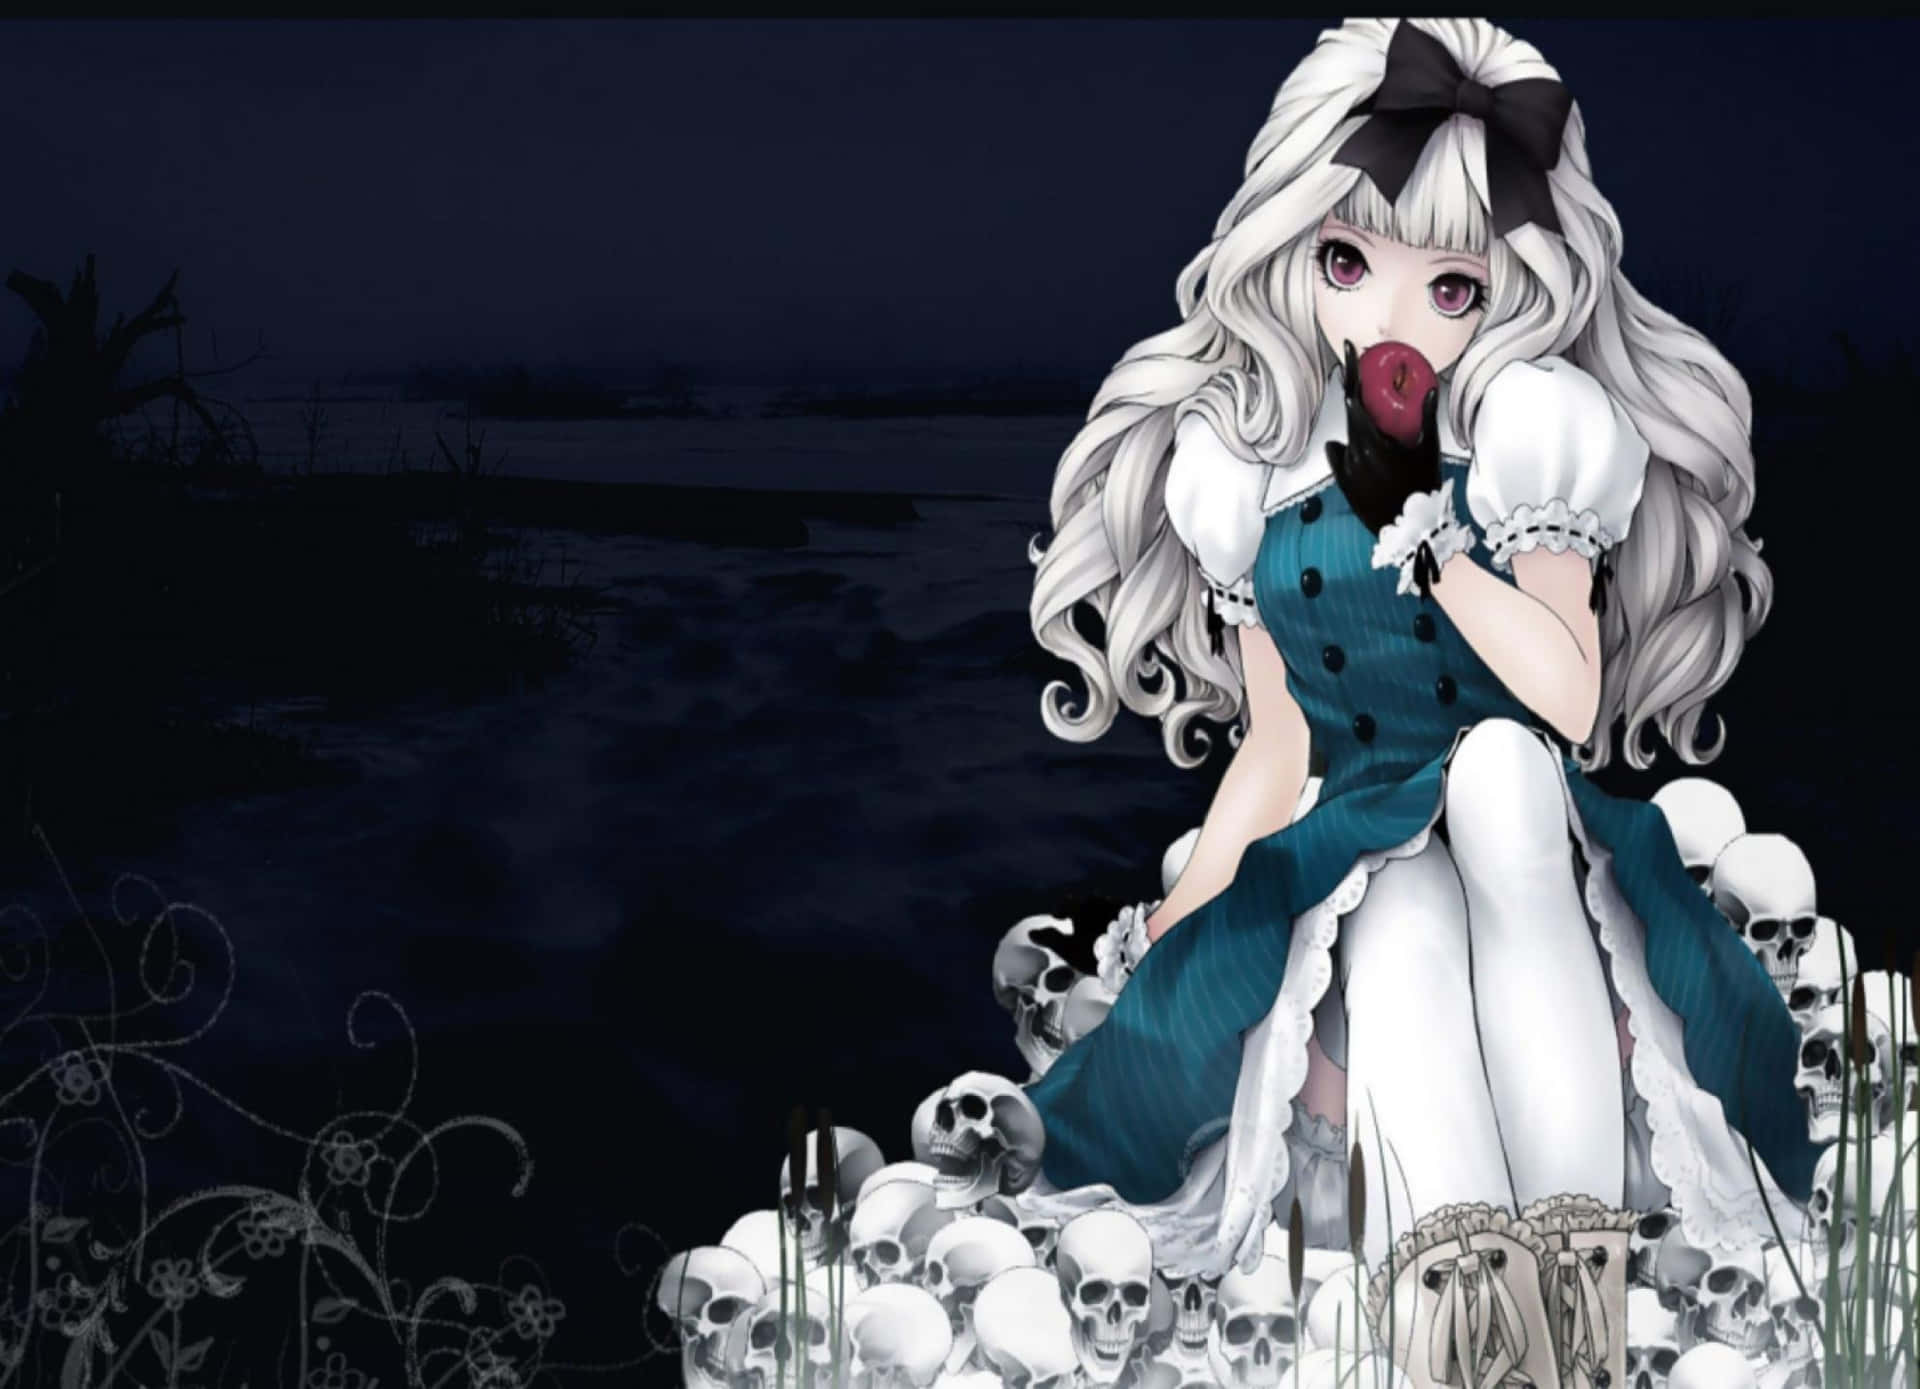 Creepy Dark Anime Girl with Skulls | Poster